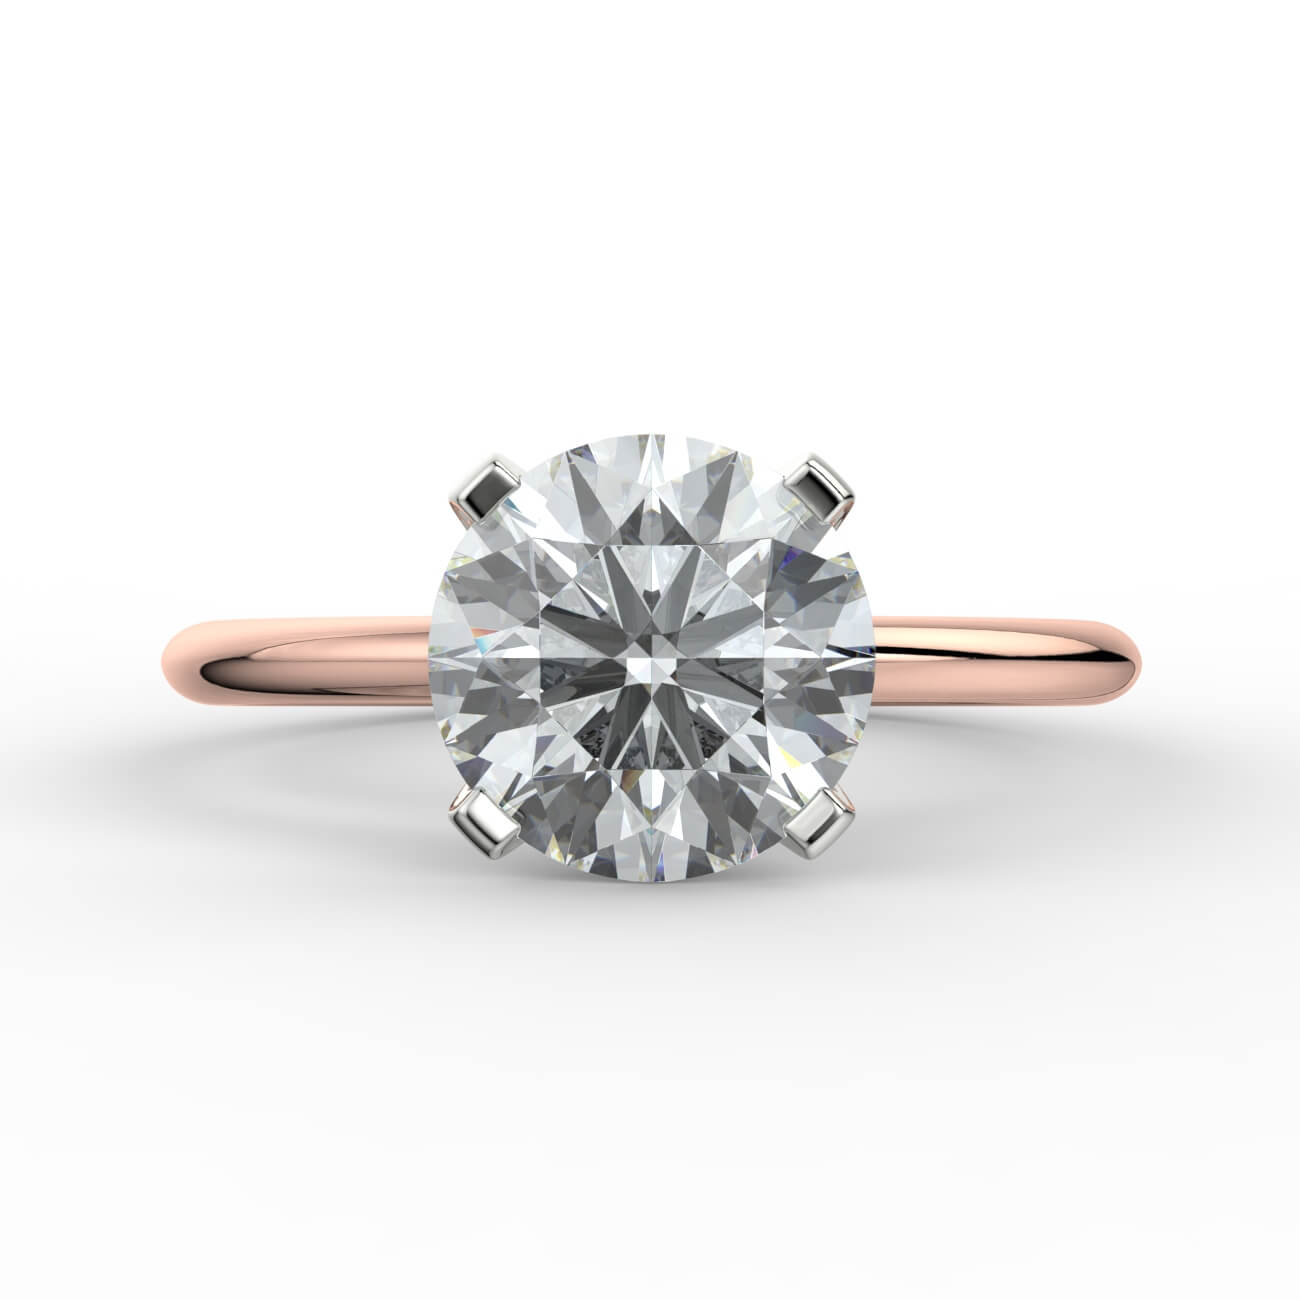 Knife-edge solitaire diamond engagement ring in white and rose gold – Australian Diamond Network